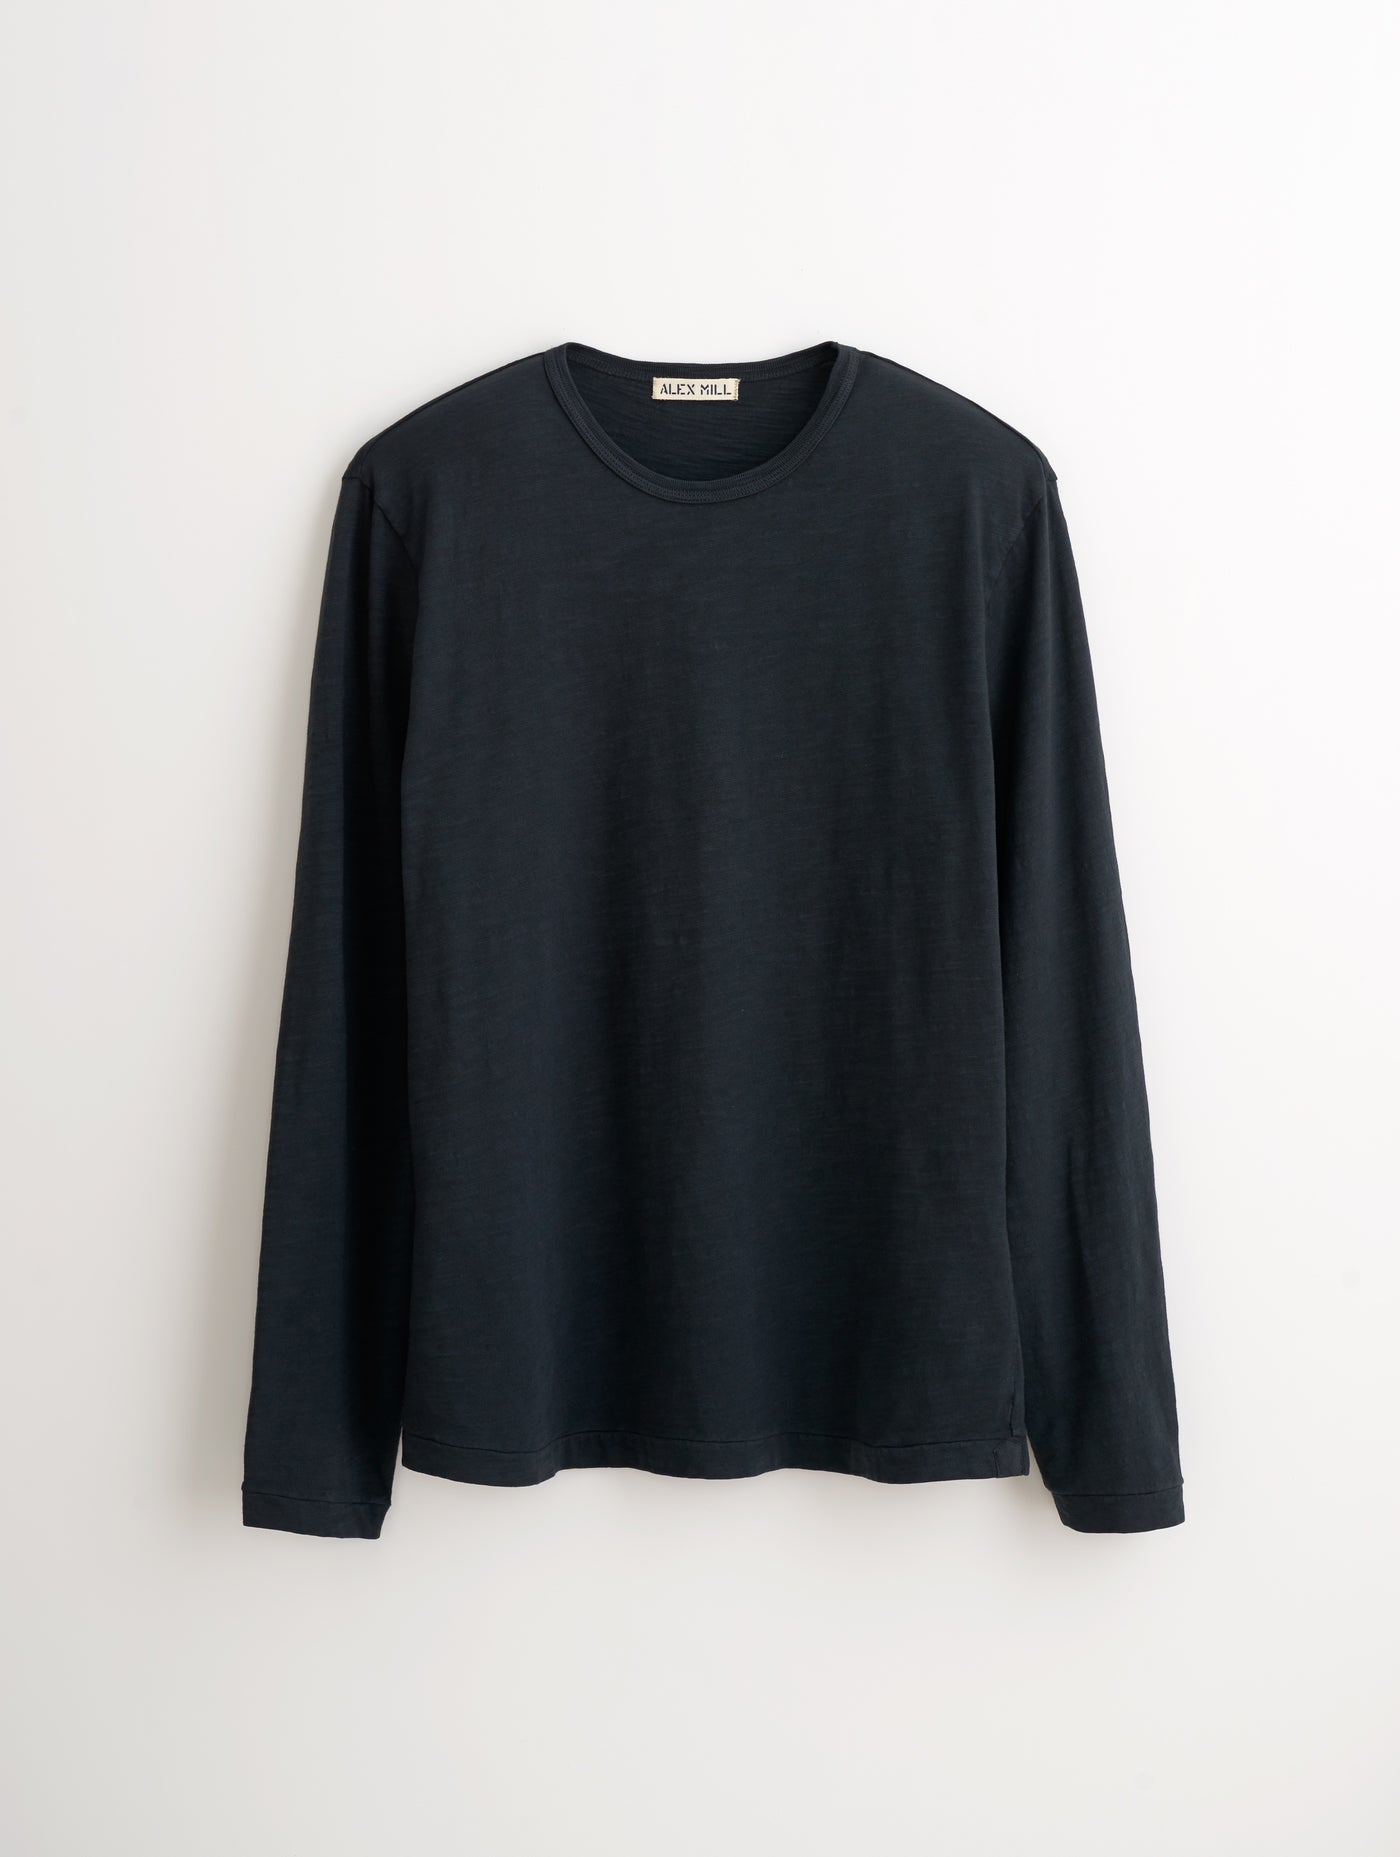 Black Long Sleeve T-shirt (3110510)